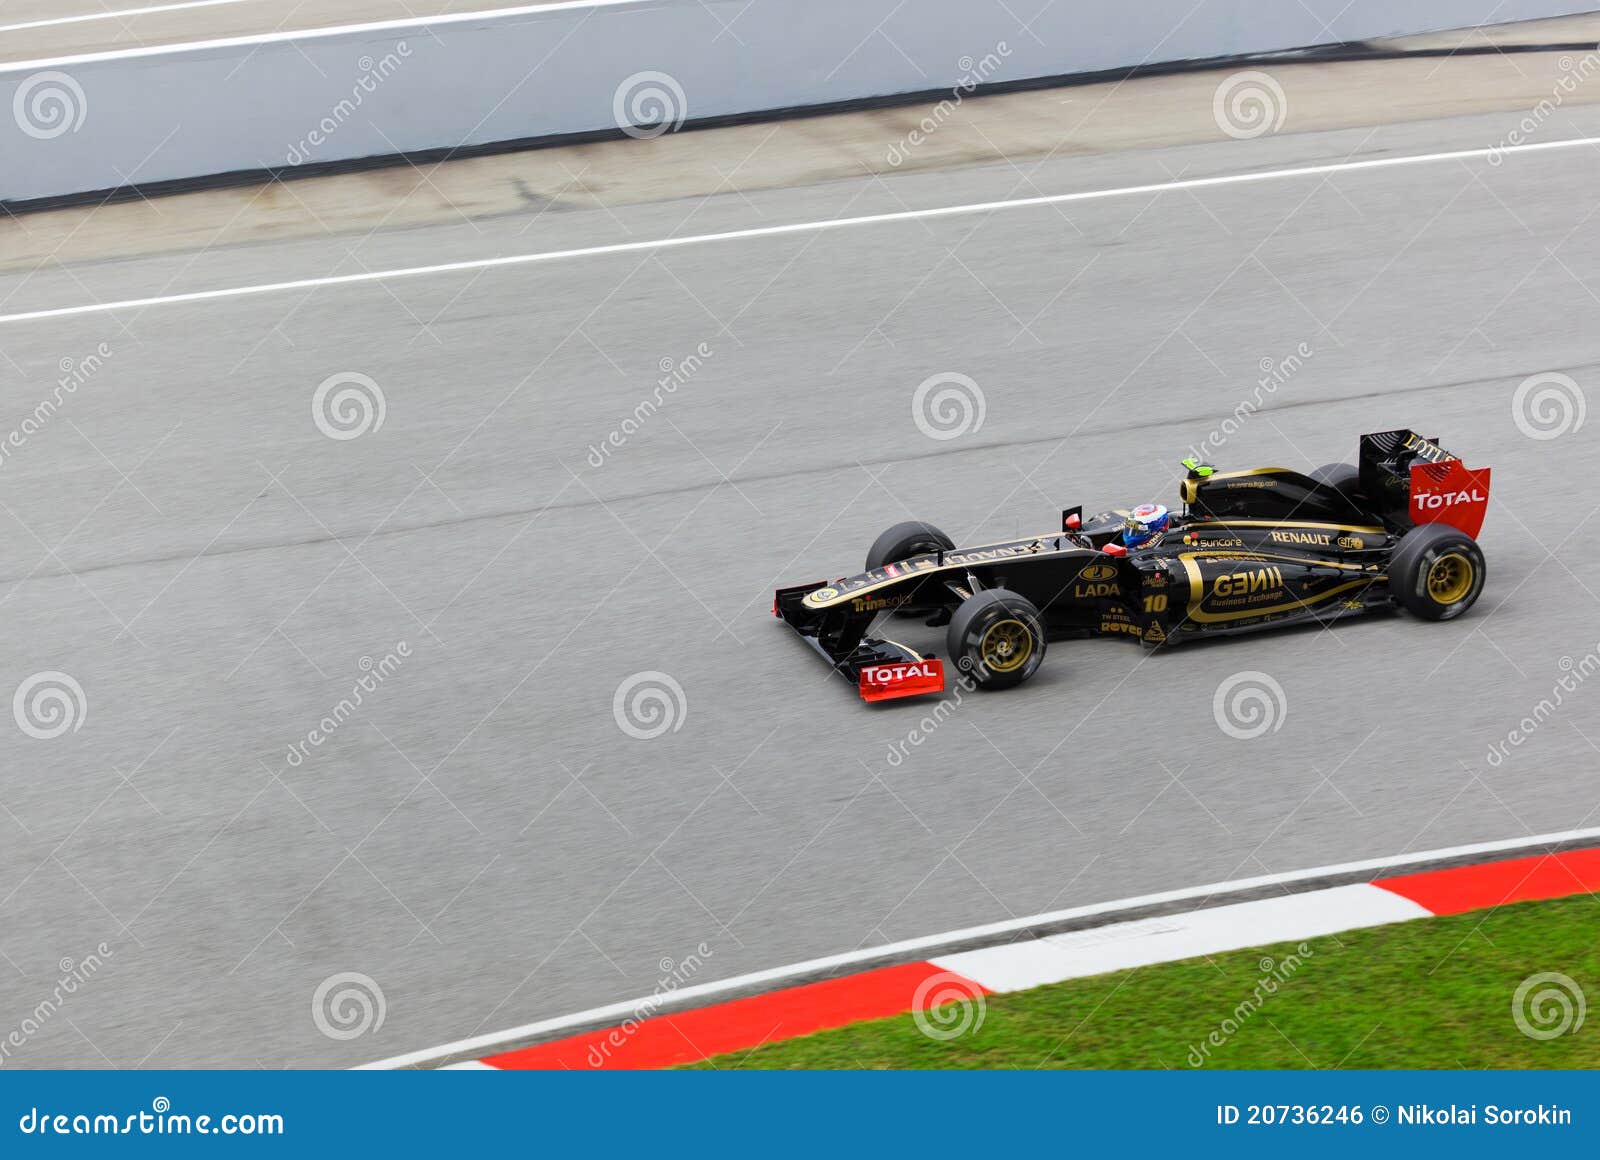 Vitaly Petrov (team Lotus Renault) Editorial Photo - Image of renault